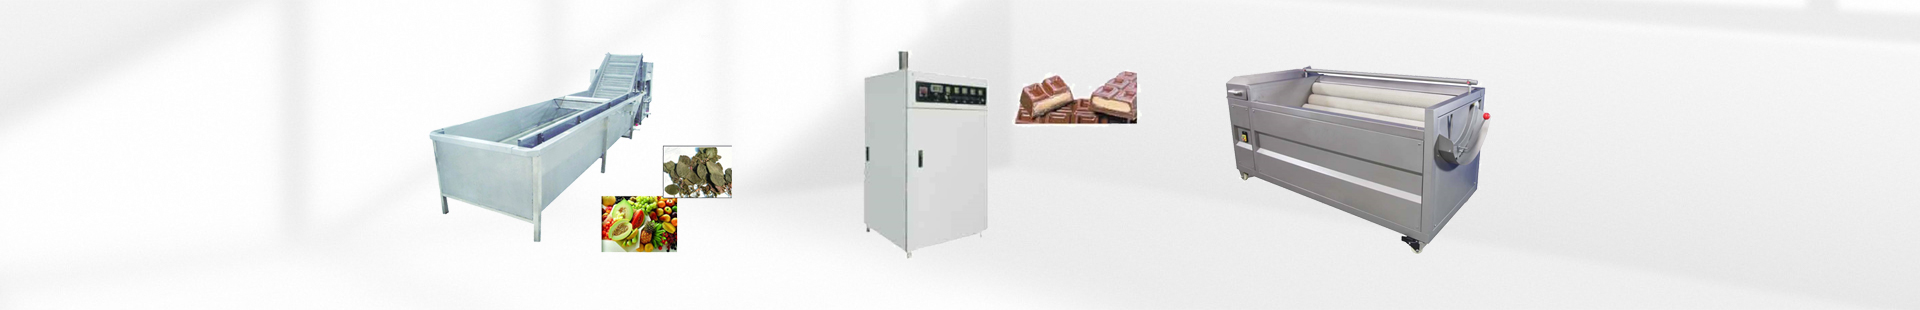 Commercial Electric Dough Mixer Machine/Dough Kneading Machine